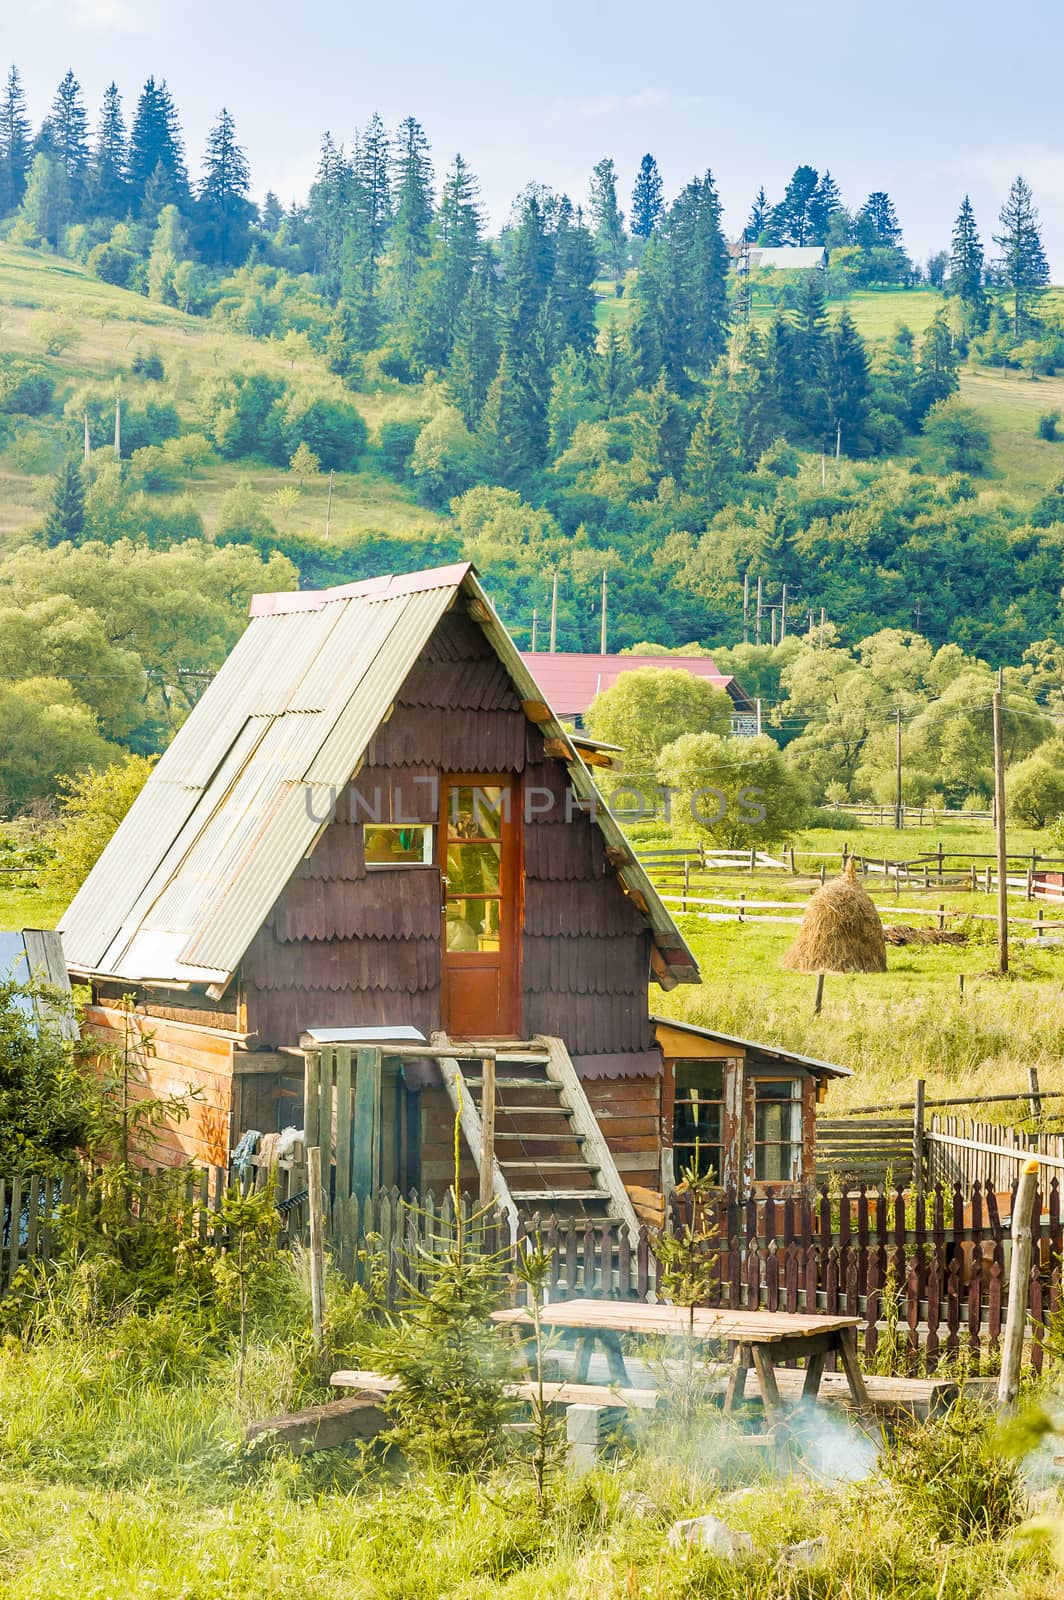 Little Hut in the Carpathians Mountains by MaxalTamor